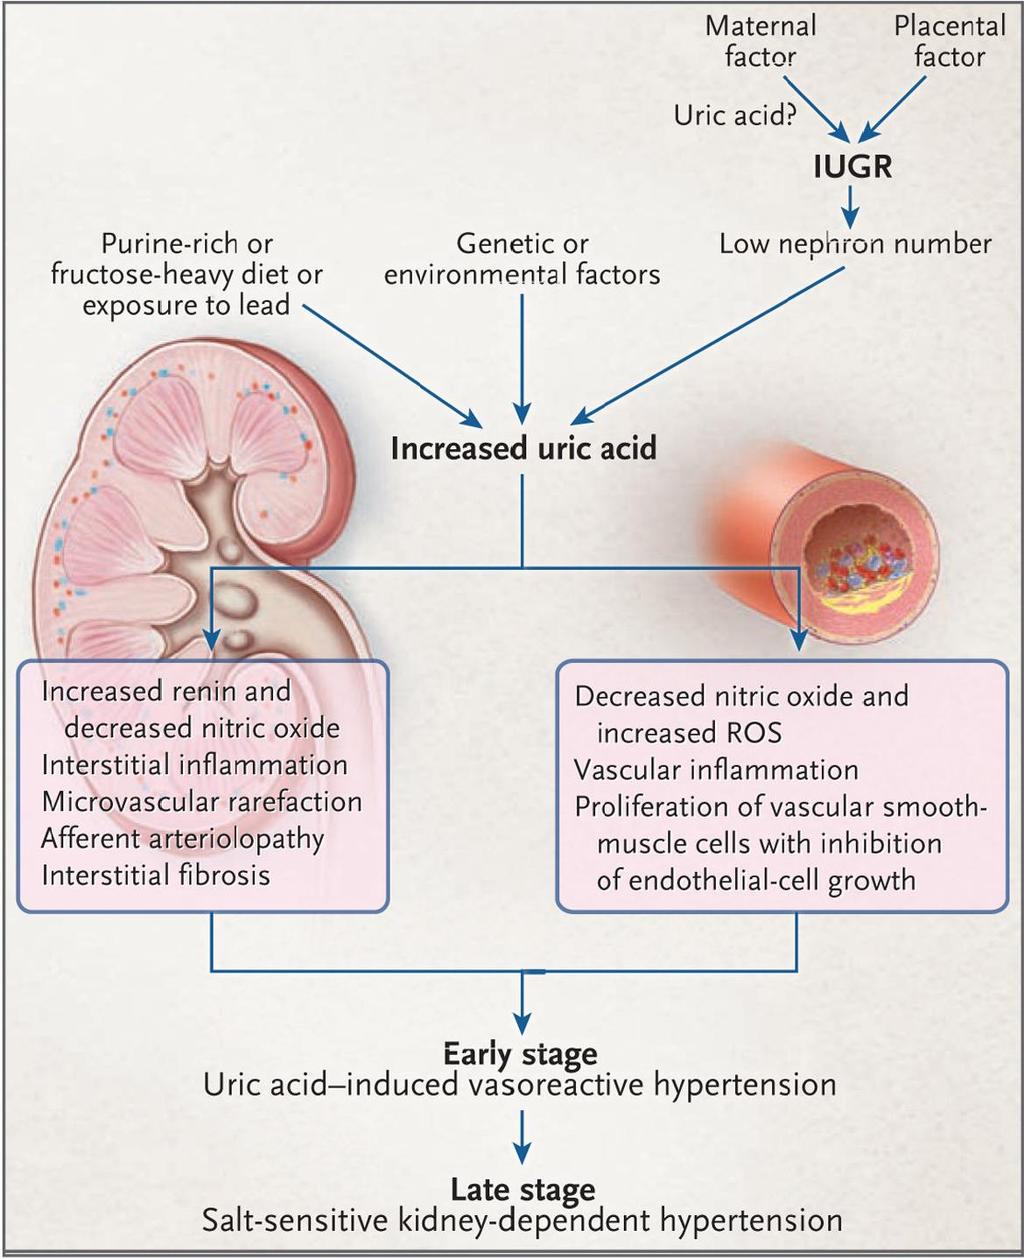 Uric acid mediated hypertension Feig